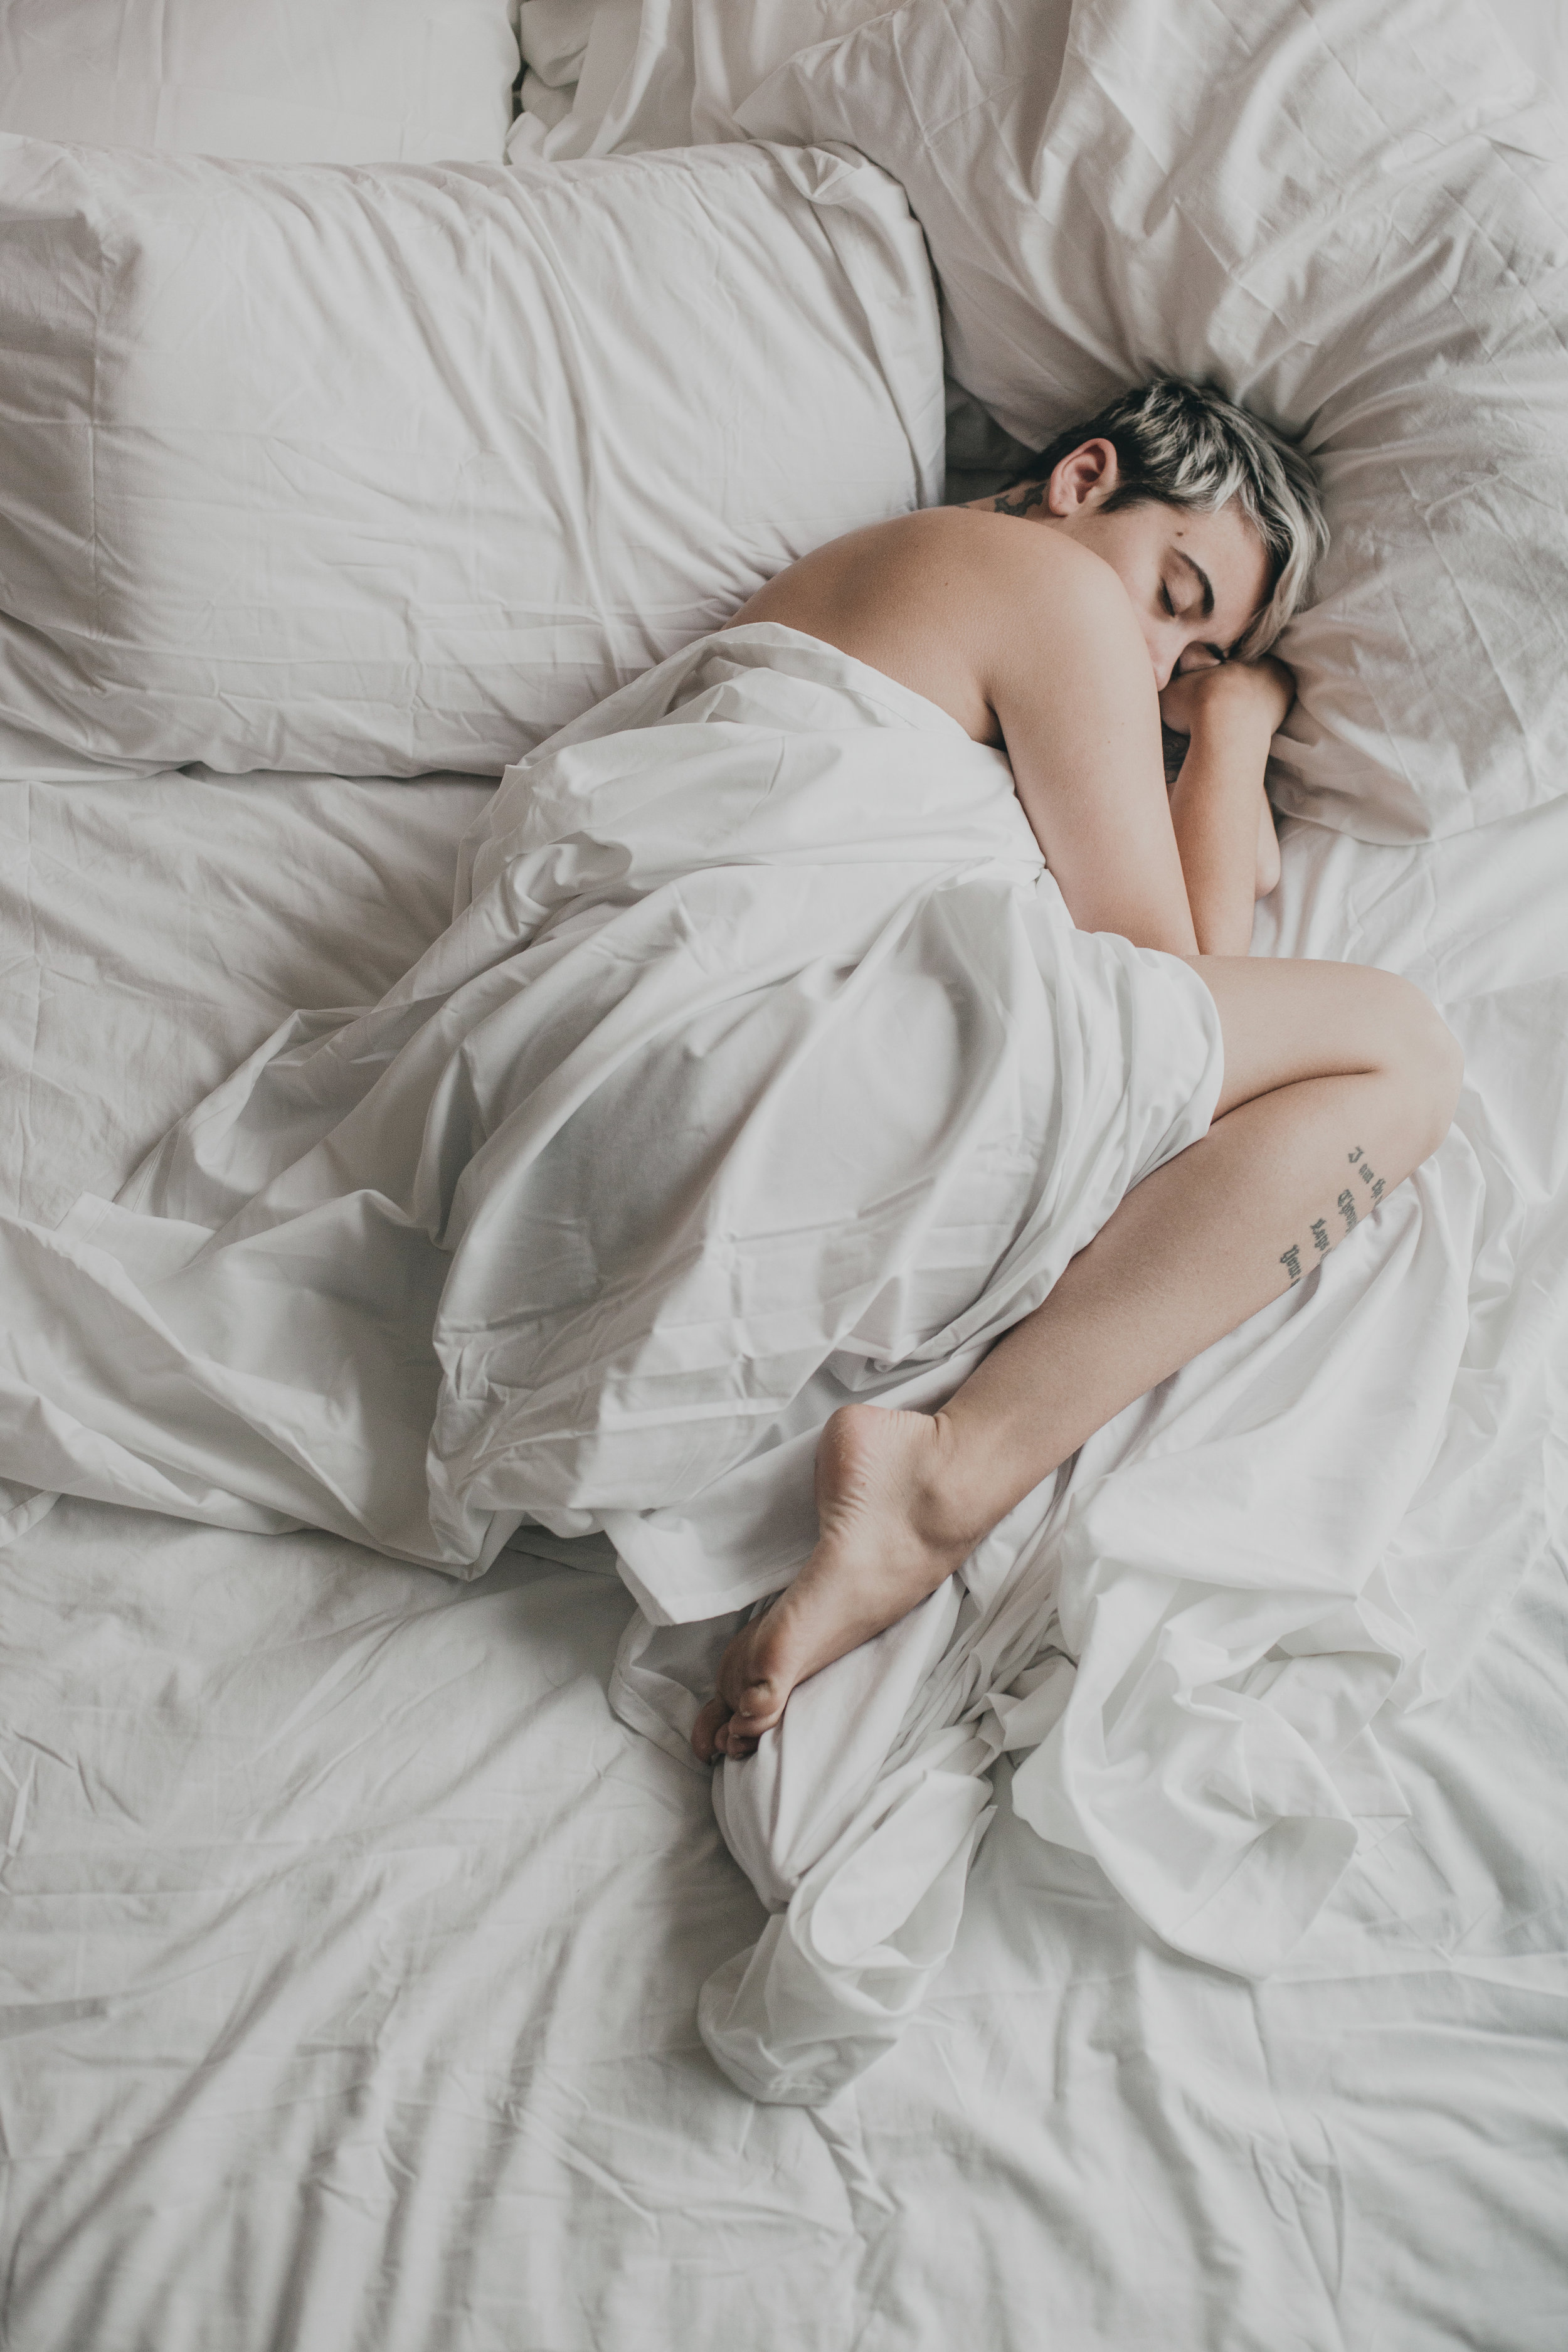 © duston-todd-lifestyle-white-sheets-bedroom-sleeping.jpg